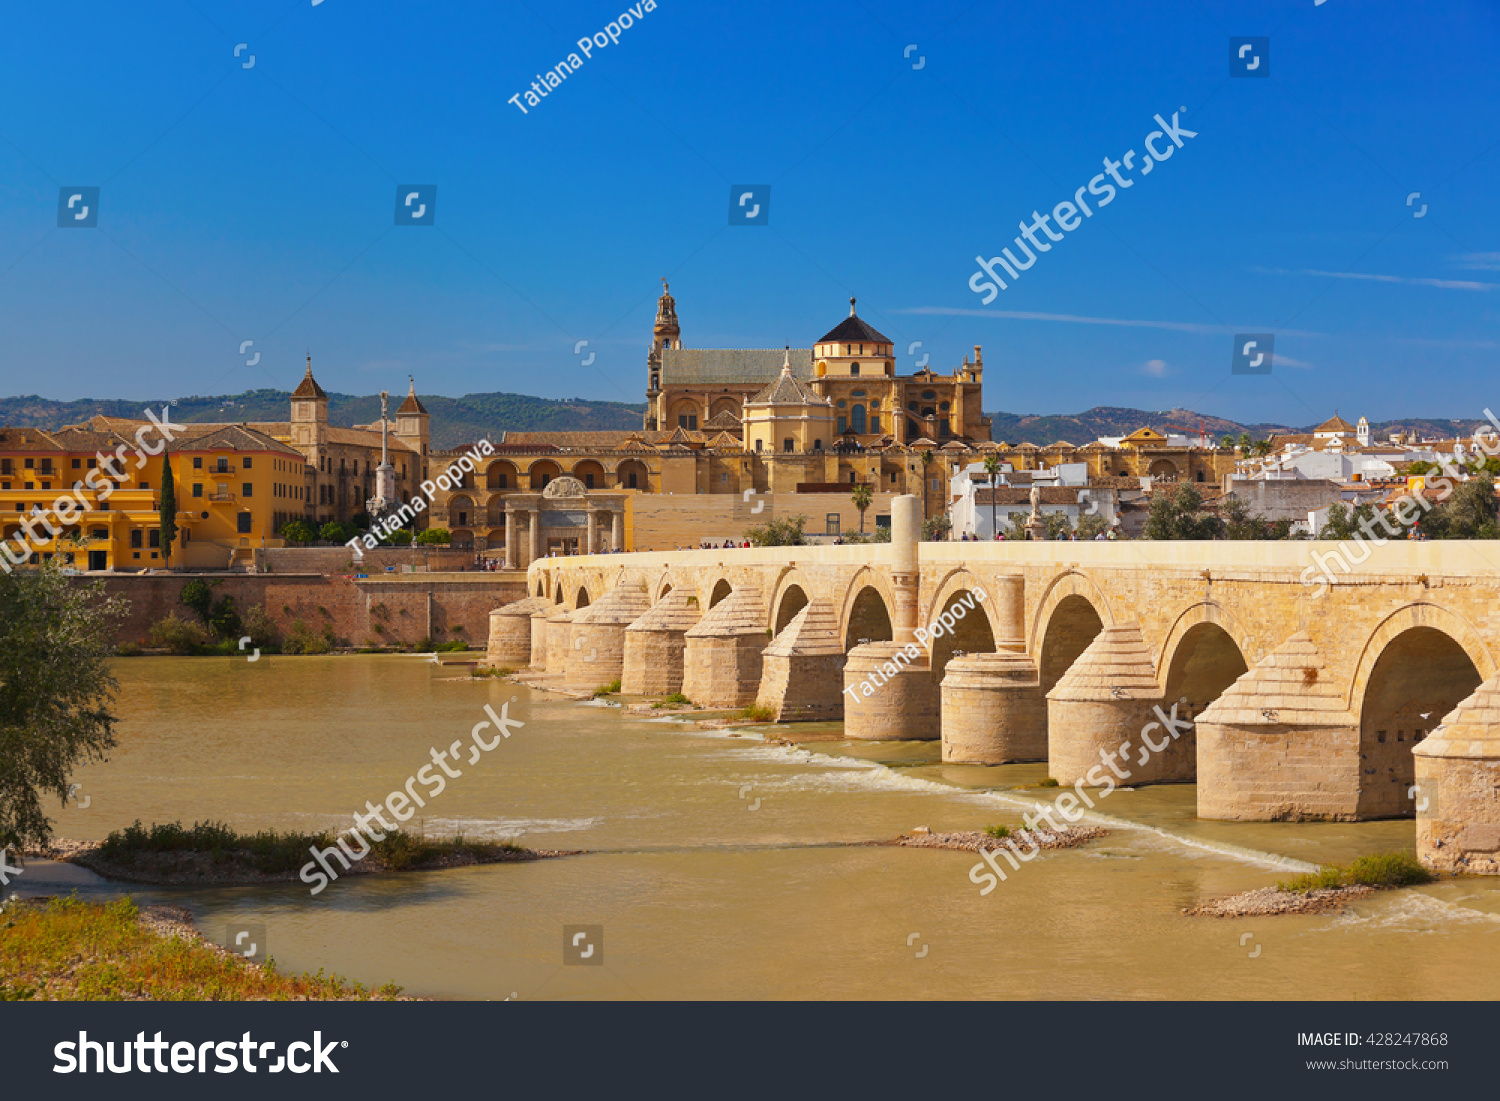 Bridge Cordoba Spain Architecture Background Stock Photo (Edit Now) 428247868